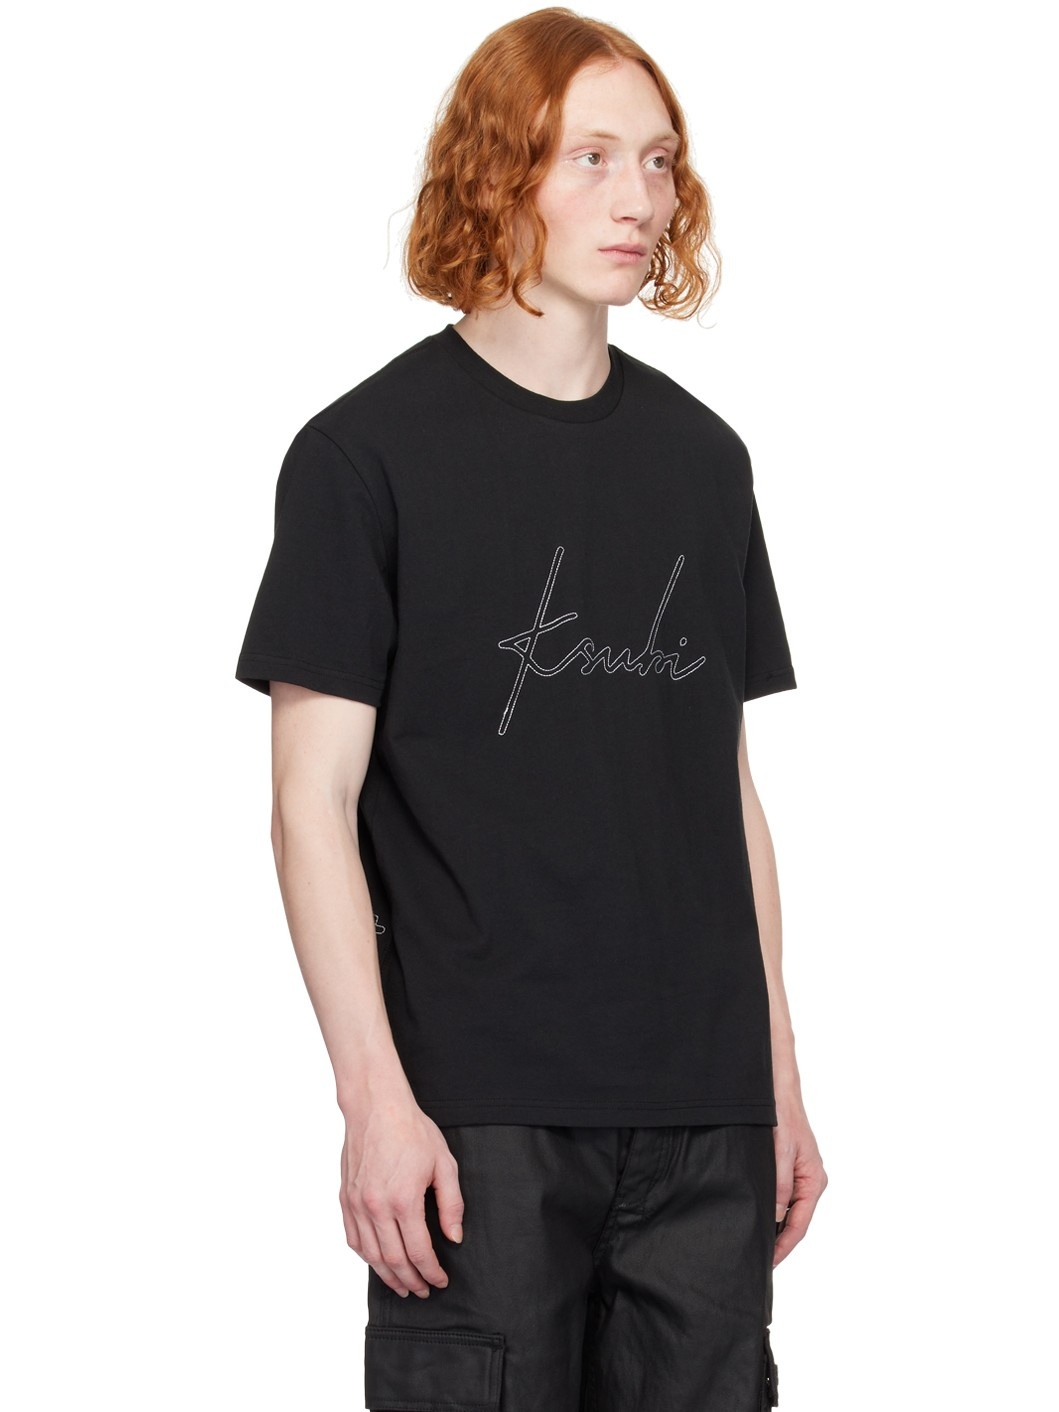 Black Skripture Kash T-Shirt - 2